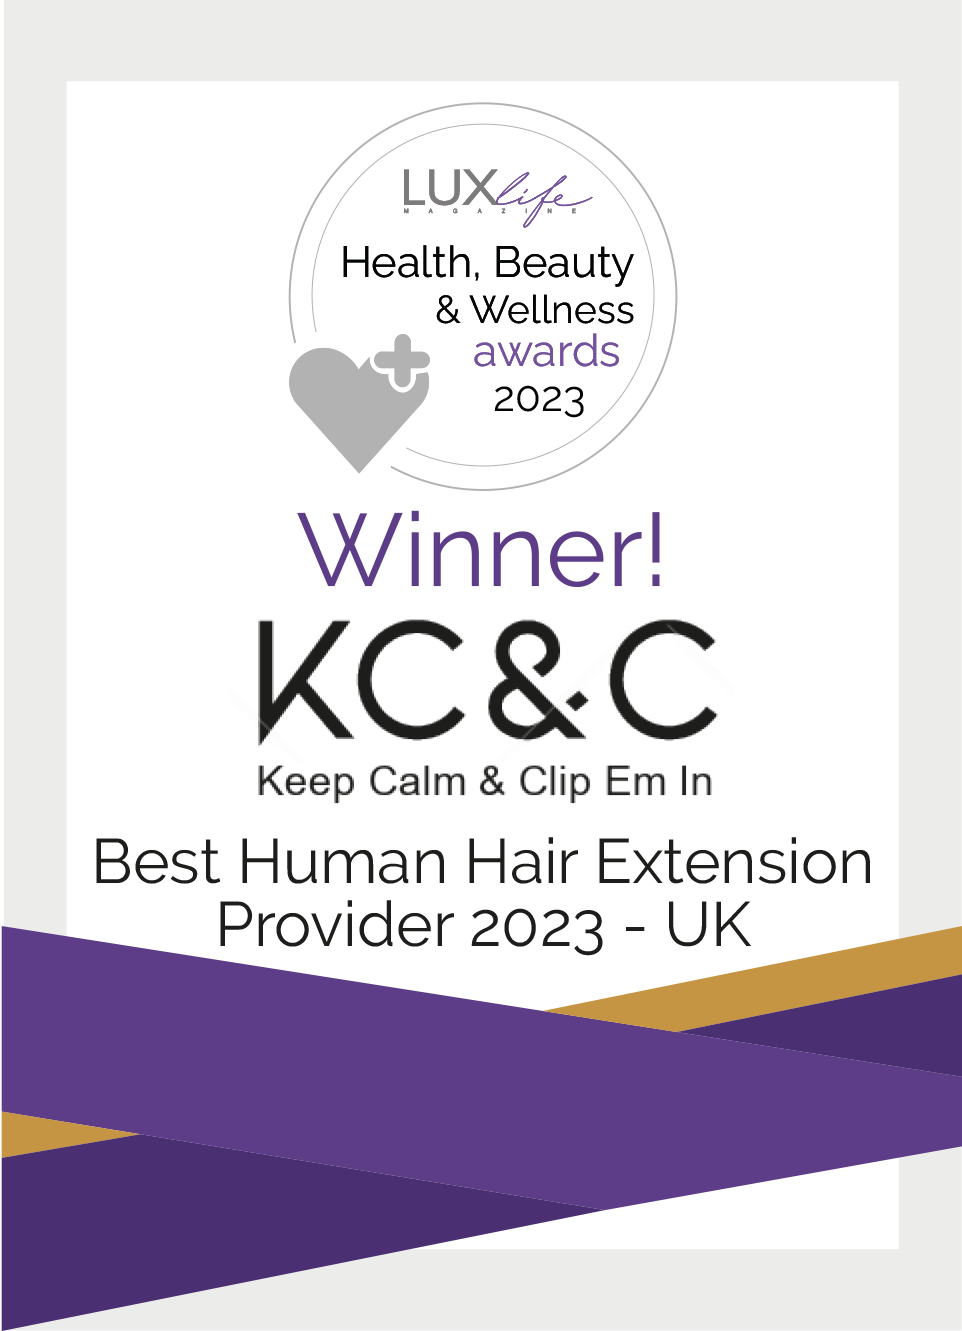 Best Human Hair Extension Provider UK 2023